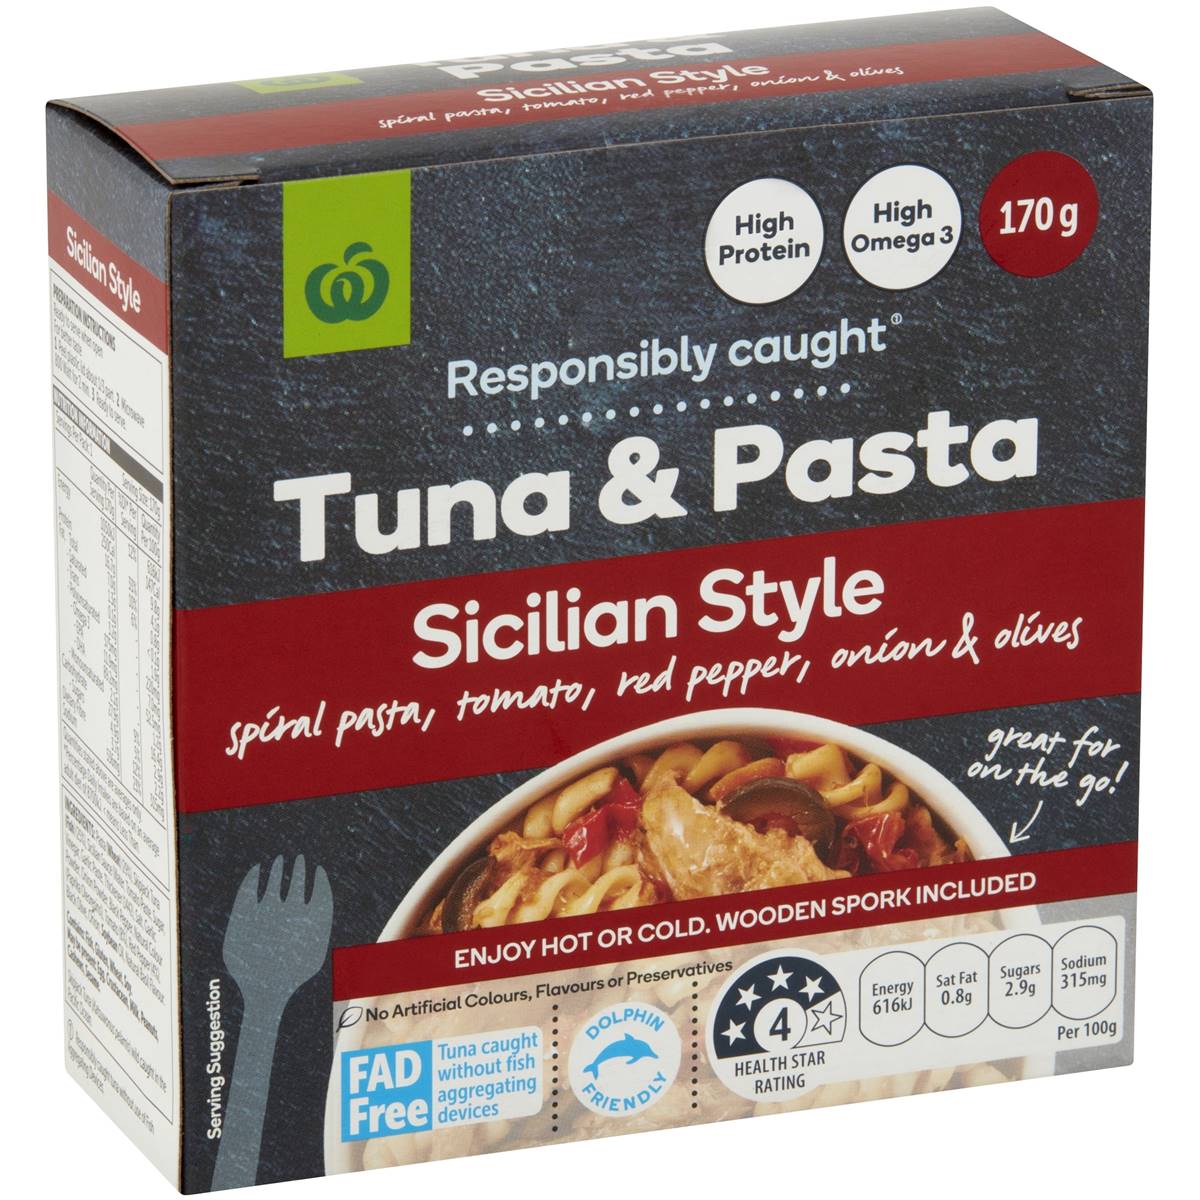 Calories in Woolworths Tuna Pasta Sicilian